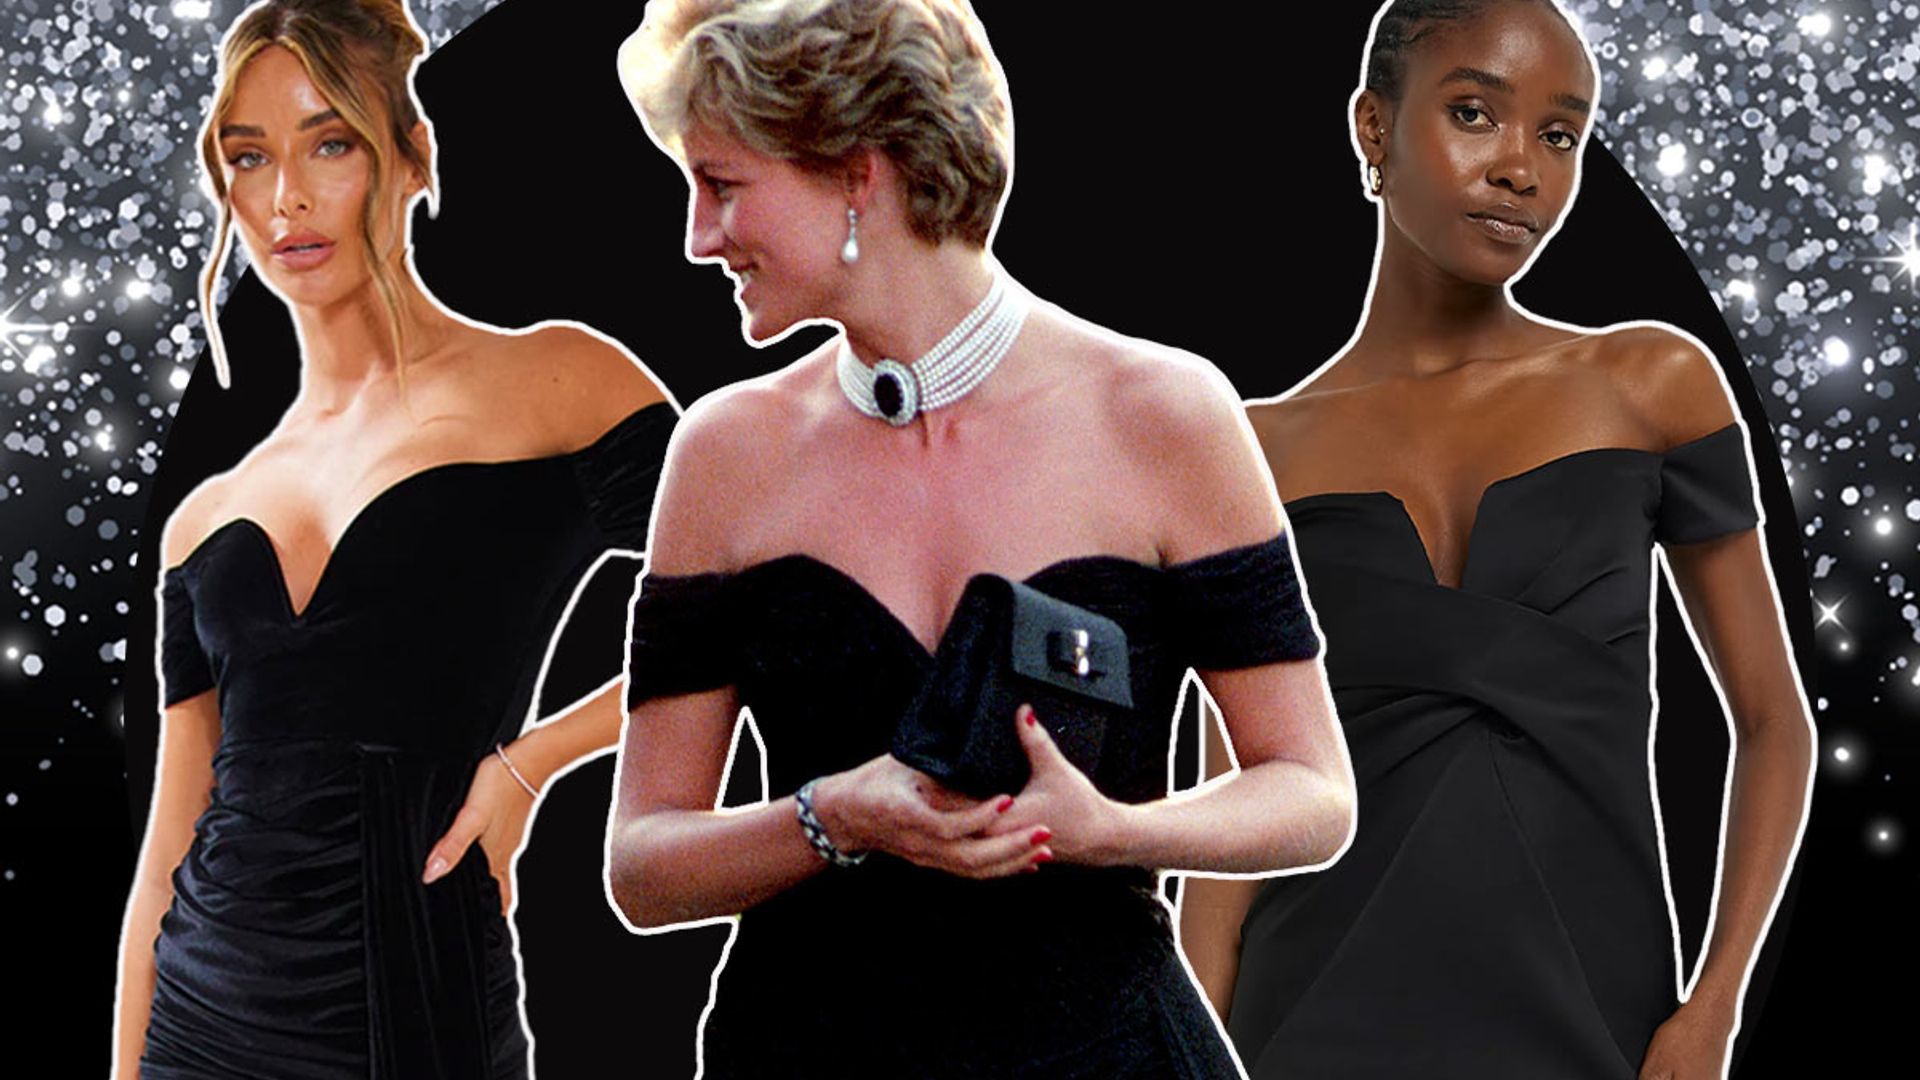 Princess Diana originally wanted her iconic 'revenge dress' in white colour  | Entertainment | thenews.com.pk